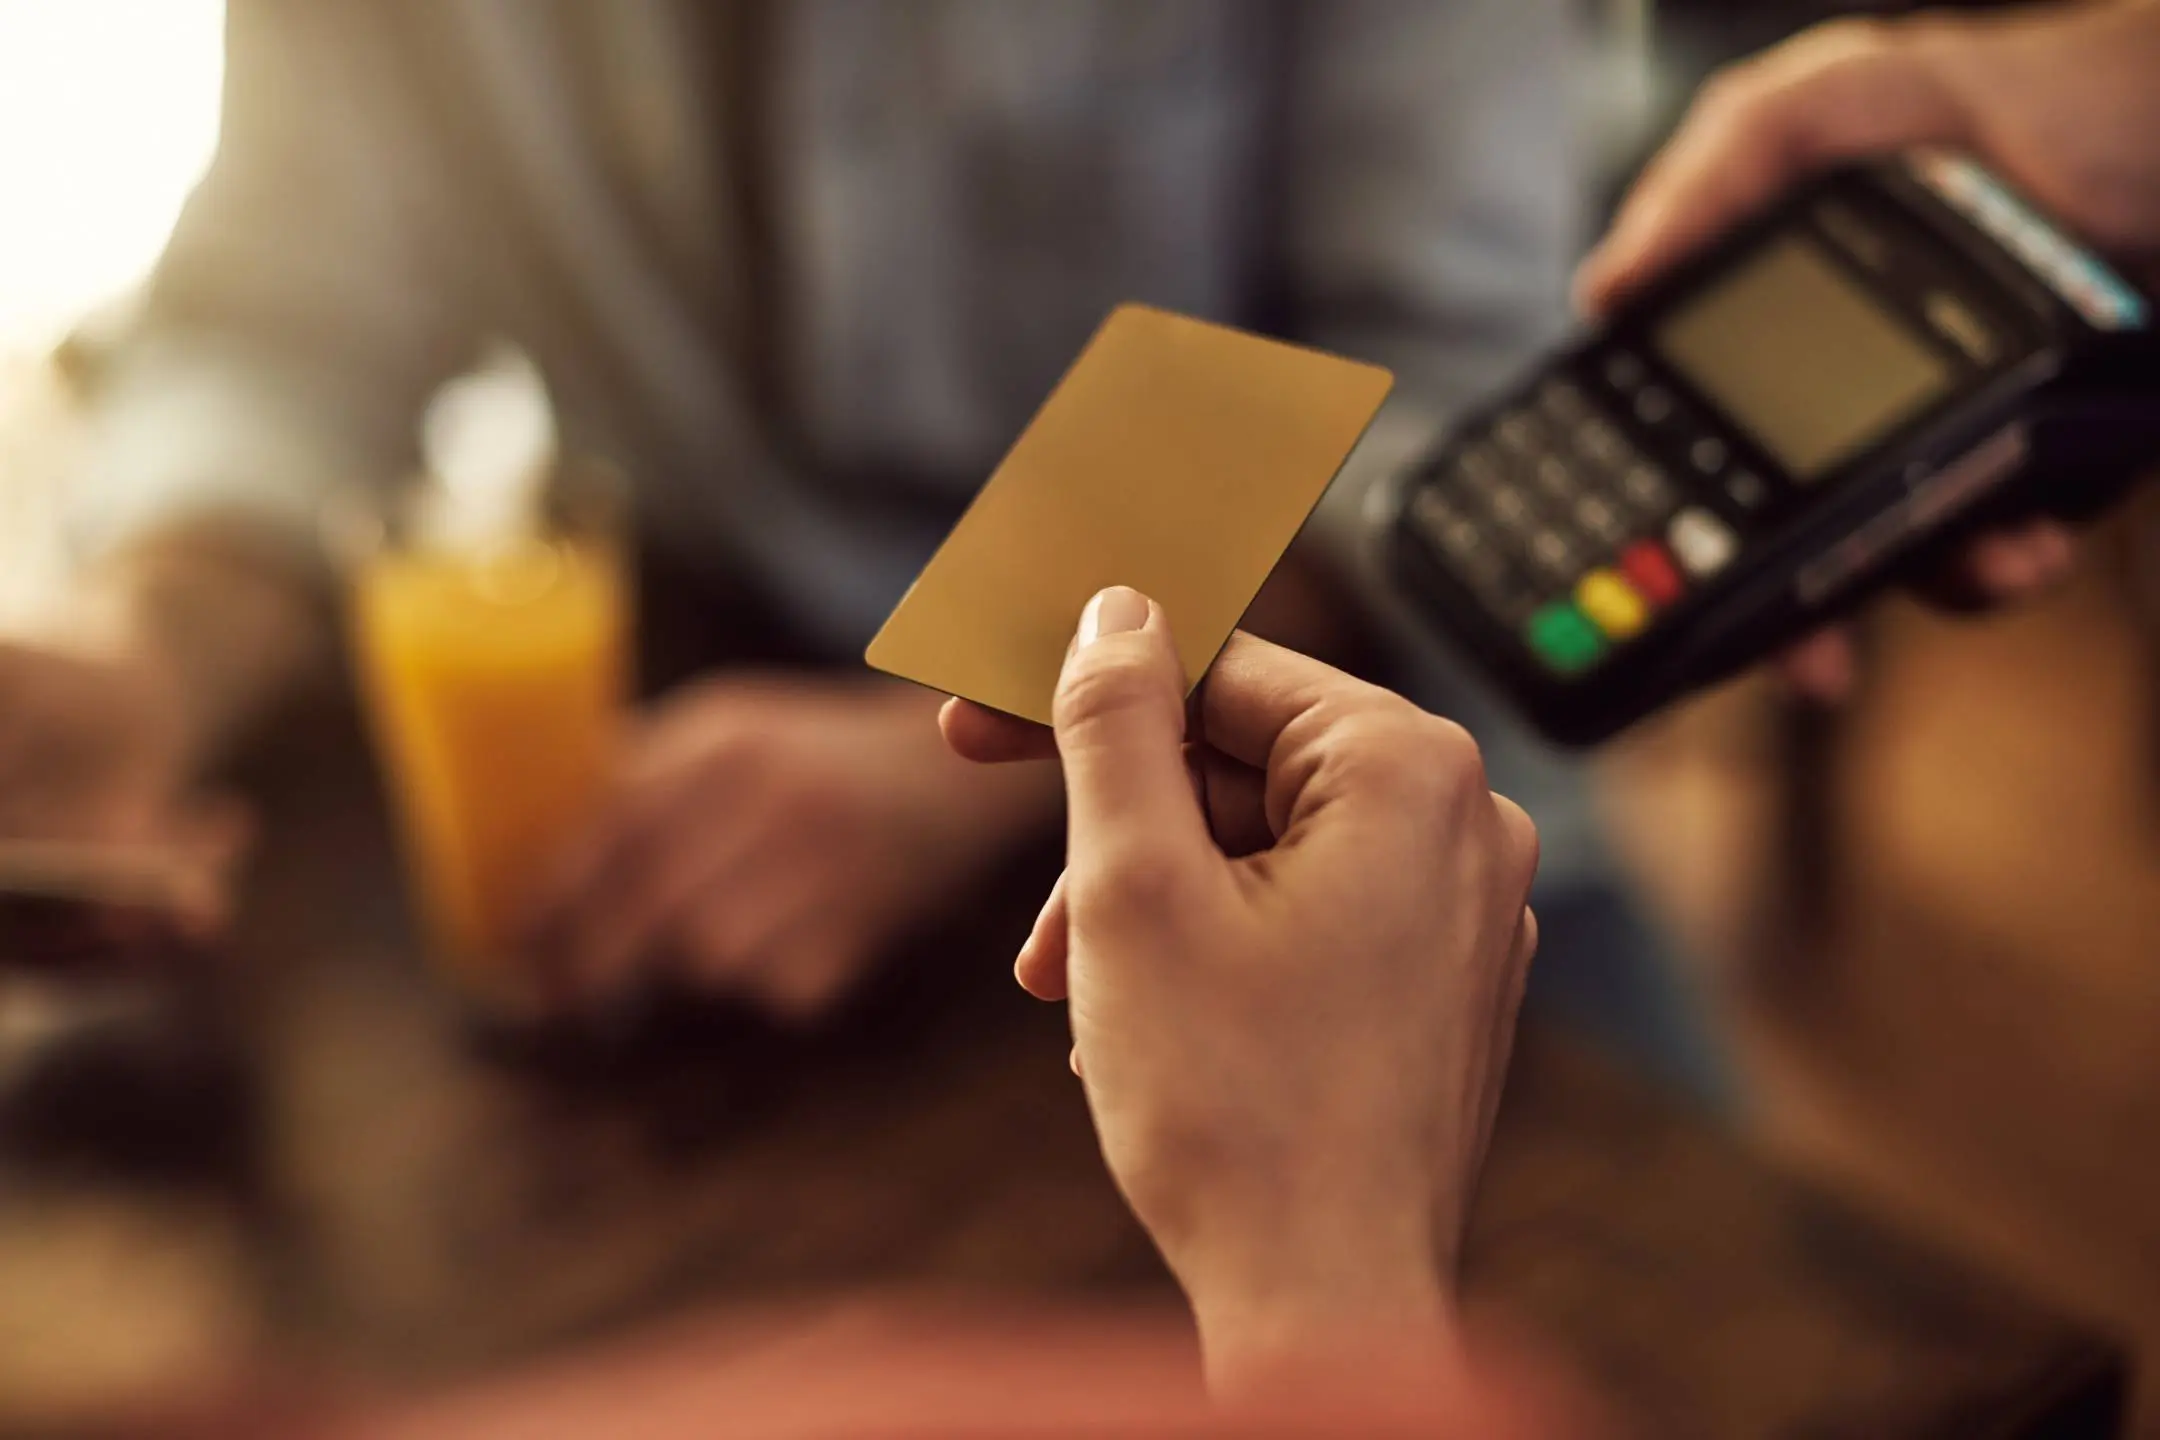 customer using card to make payment at pos terminal